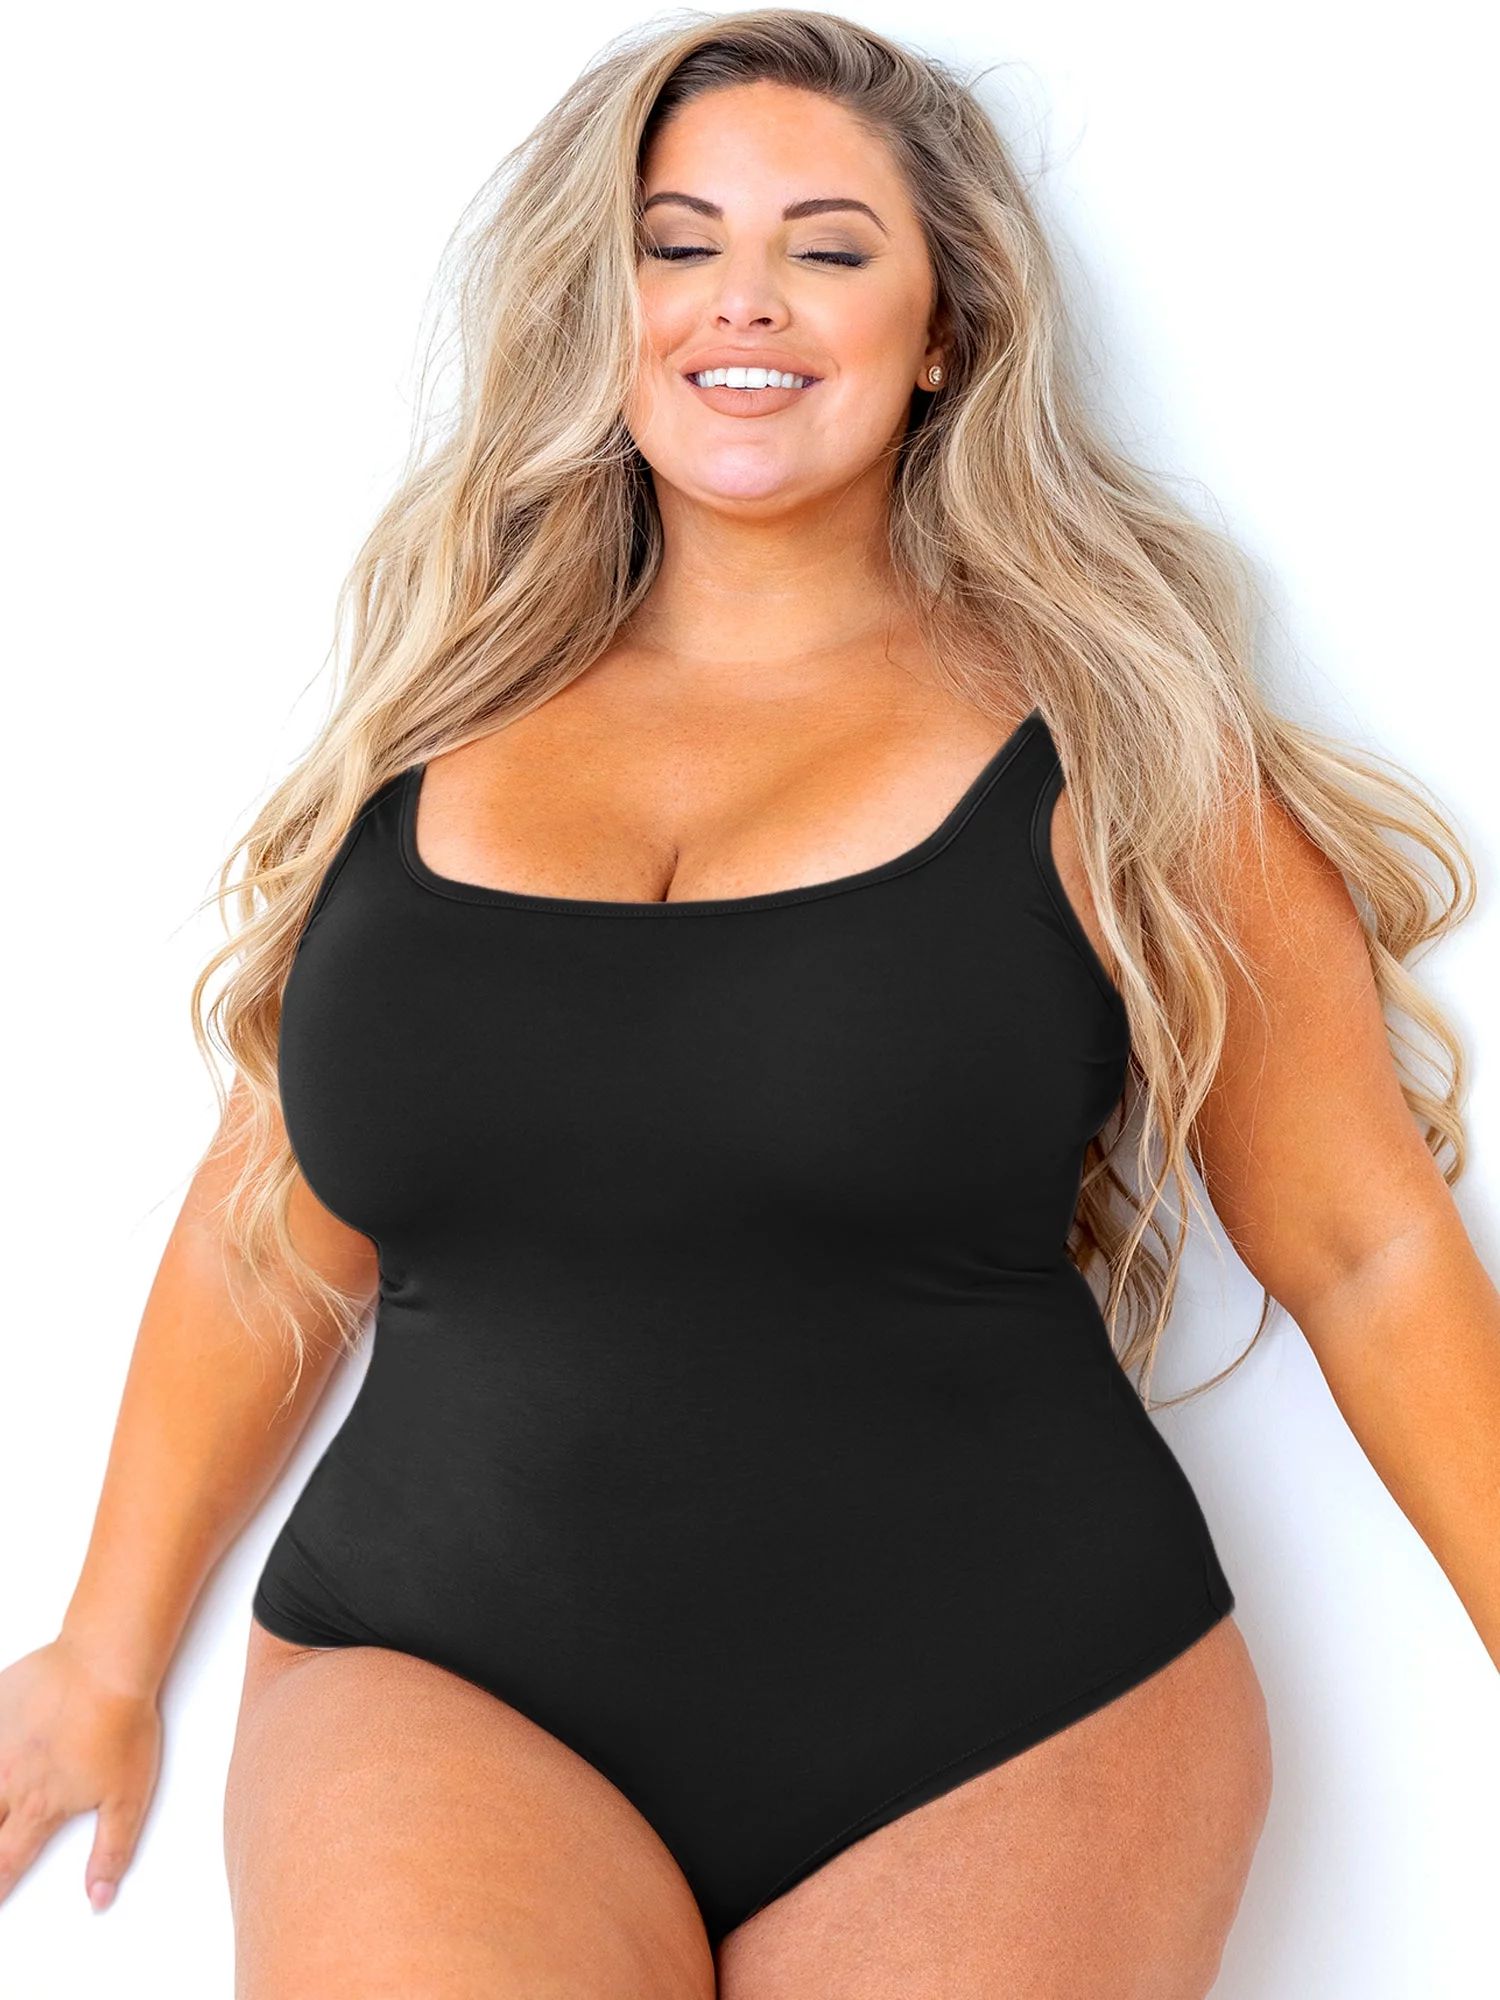 POSESHE Women's Plus Size Square Tank Bodysuit in Black, M-5X | Walmart (US)